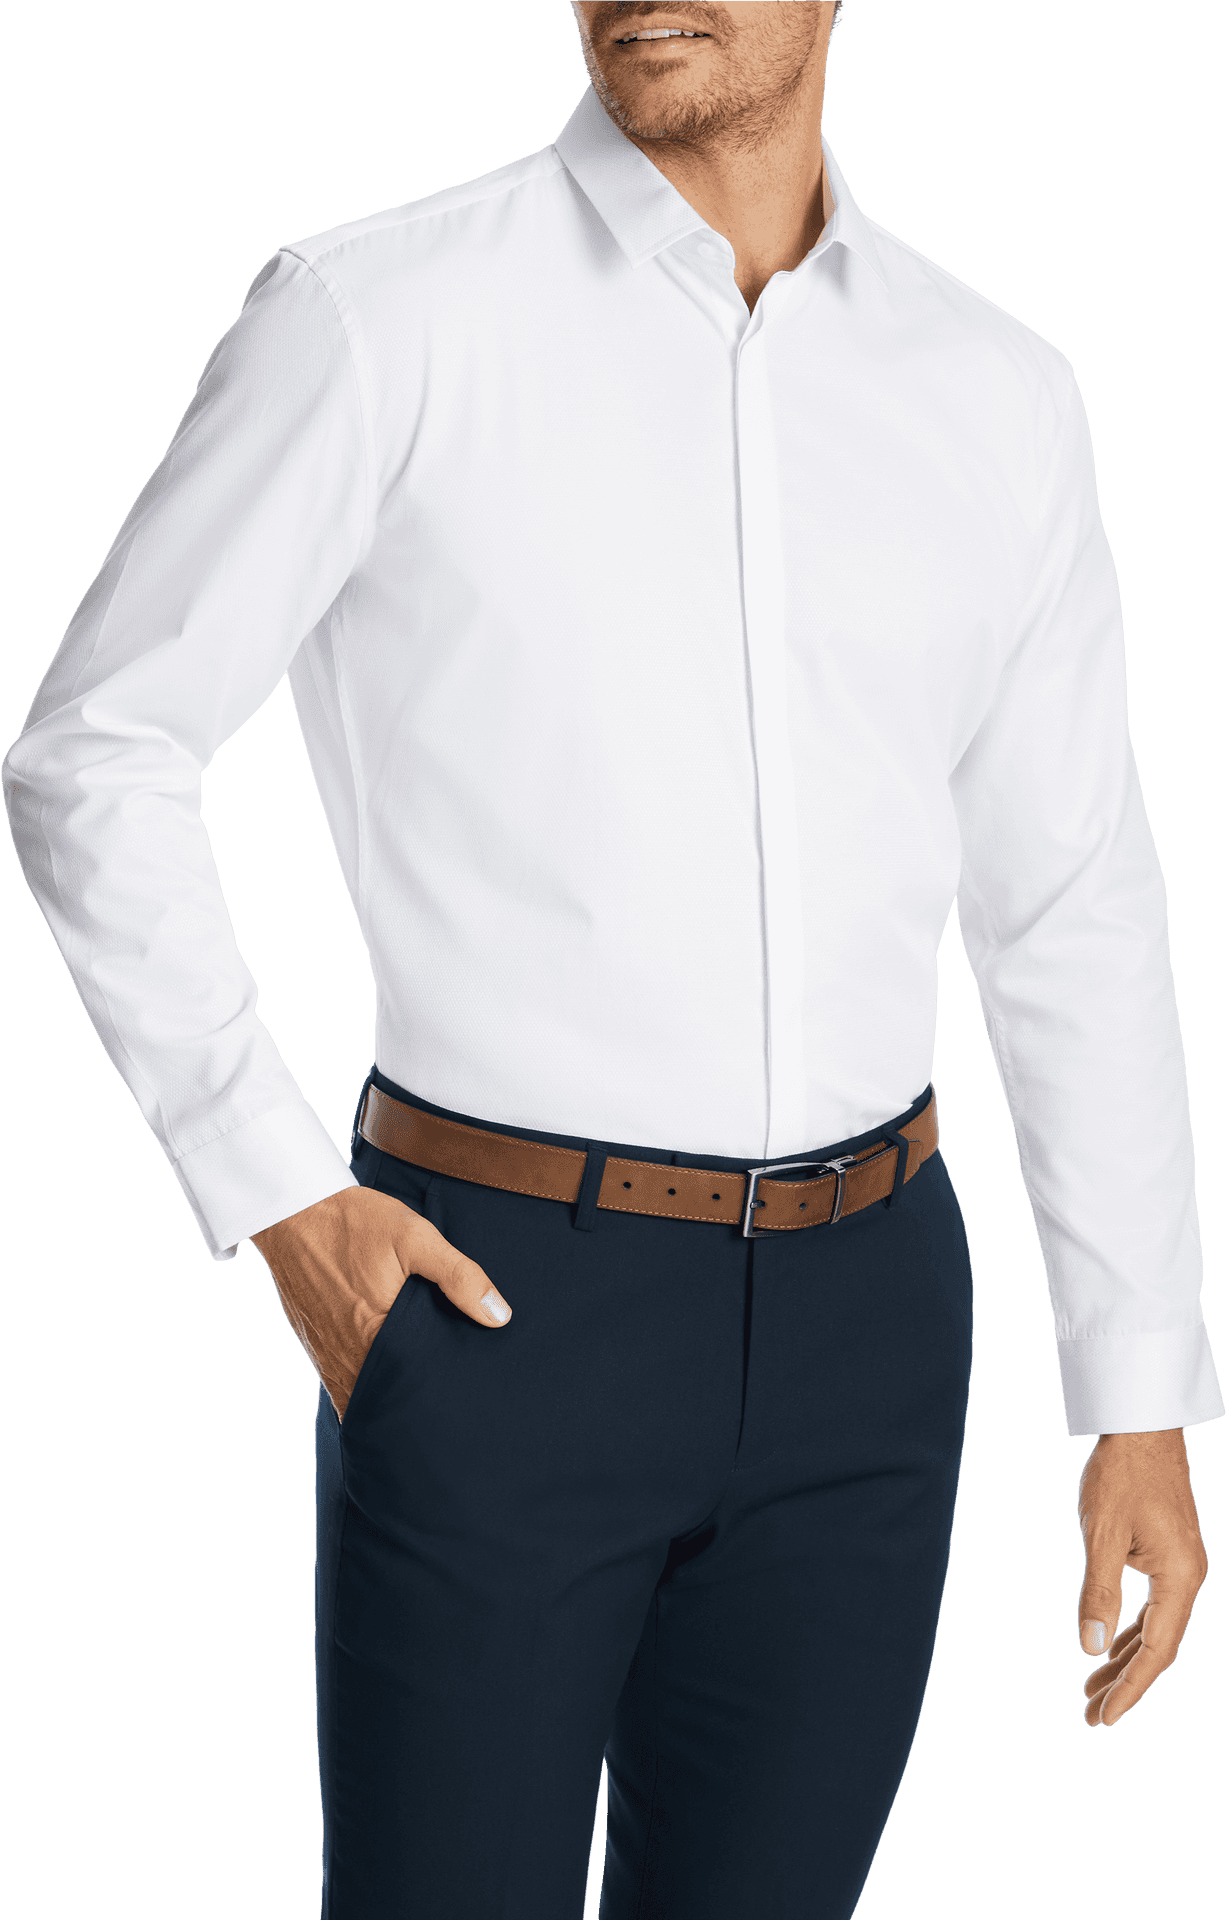 Manin Formal Attire White Shirt Navy Pants PNG image